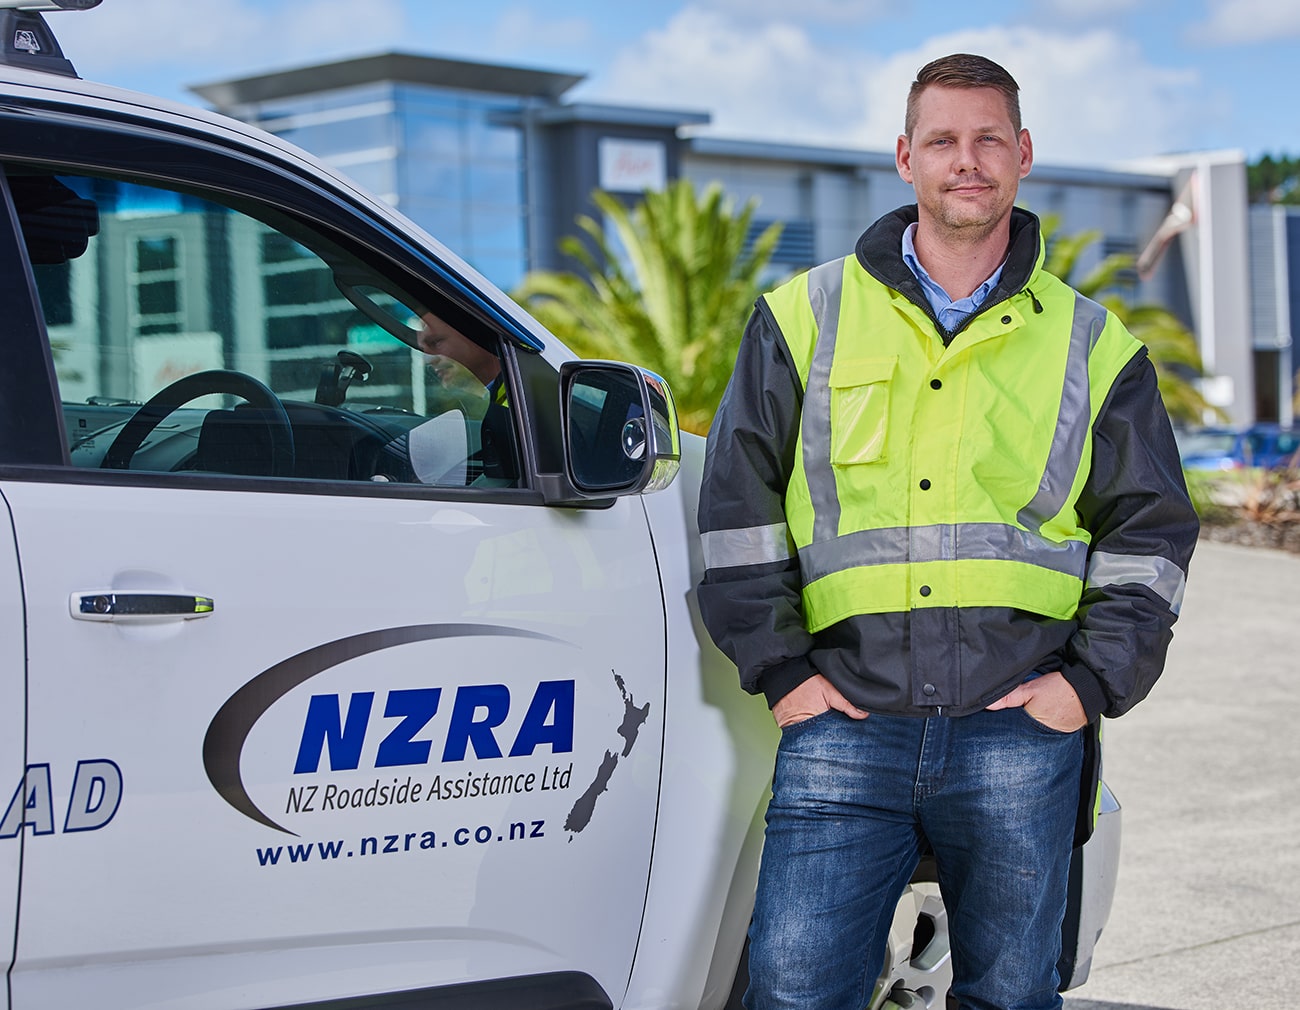 Why use NZRA